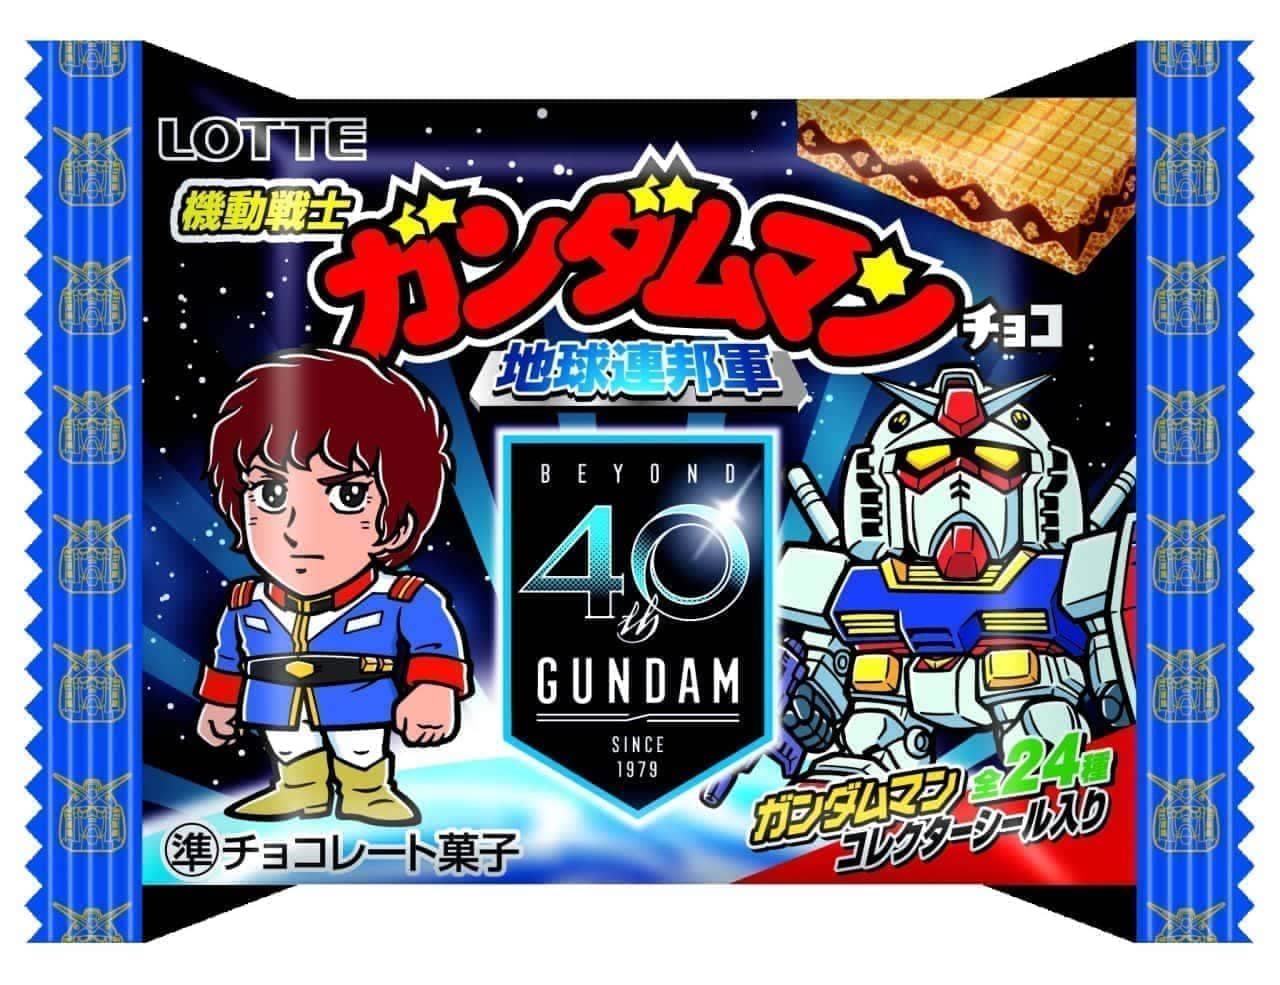 Lotte "Mobile Suit Gundam Man Chocolate"